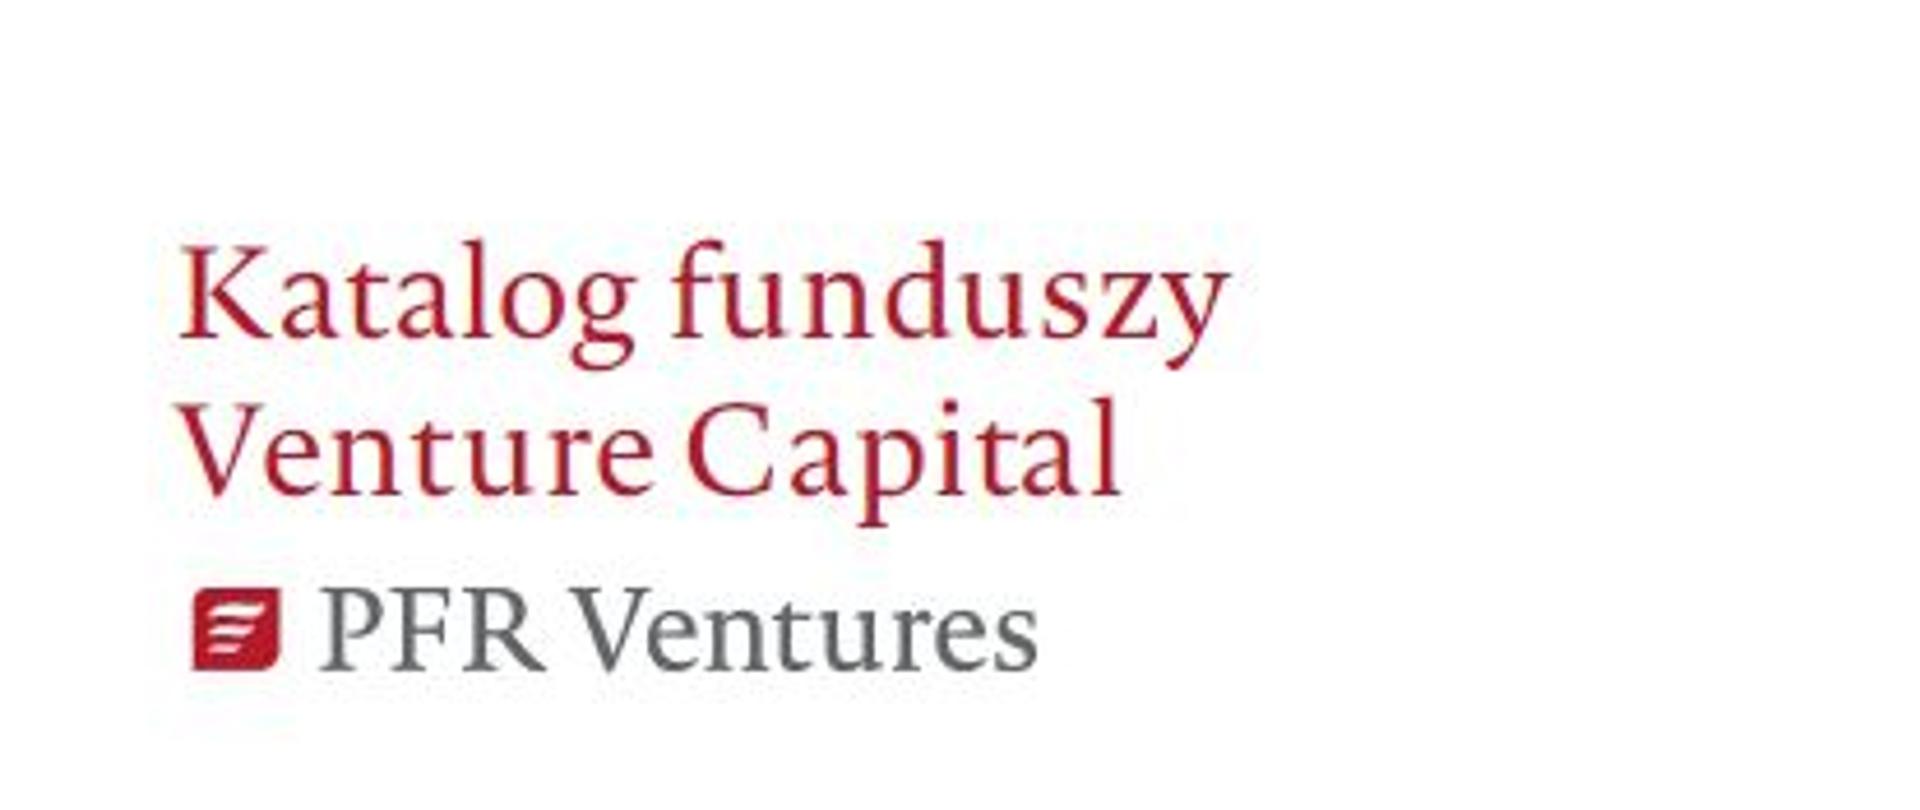 katalog funduszy Venture Capital